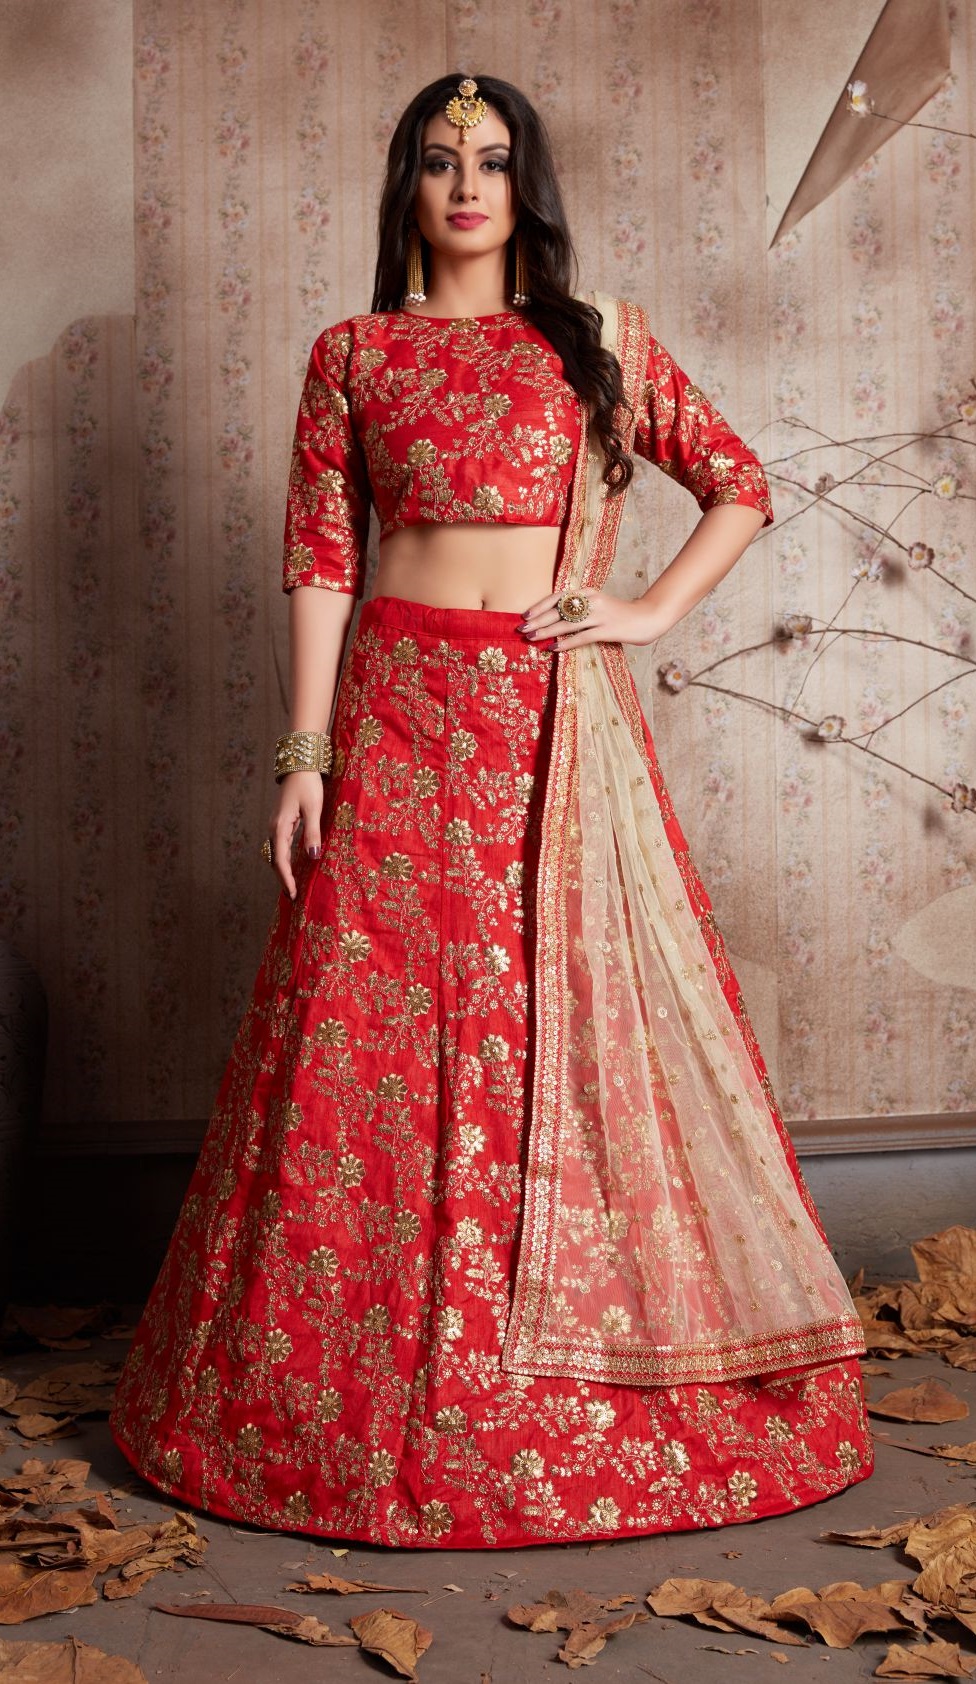 Fashion Model Front Pose, Model In Red Dress, Indian Model In Modern Dress,  Woman In Red Skirt, Indian Model In Red, Woman Hiding Breast, Woman In Red,  Model Smiling, Brunette Model Stock